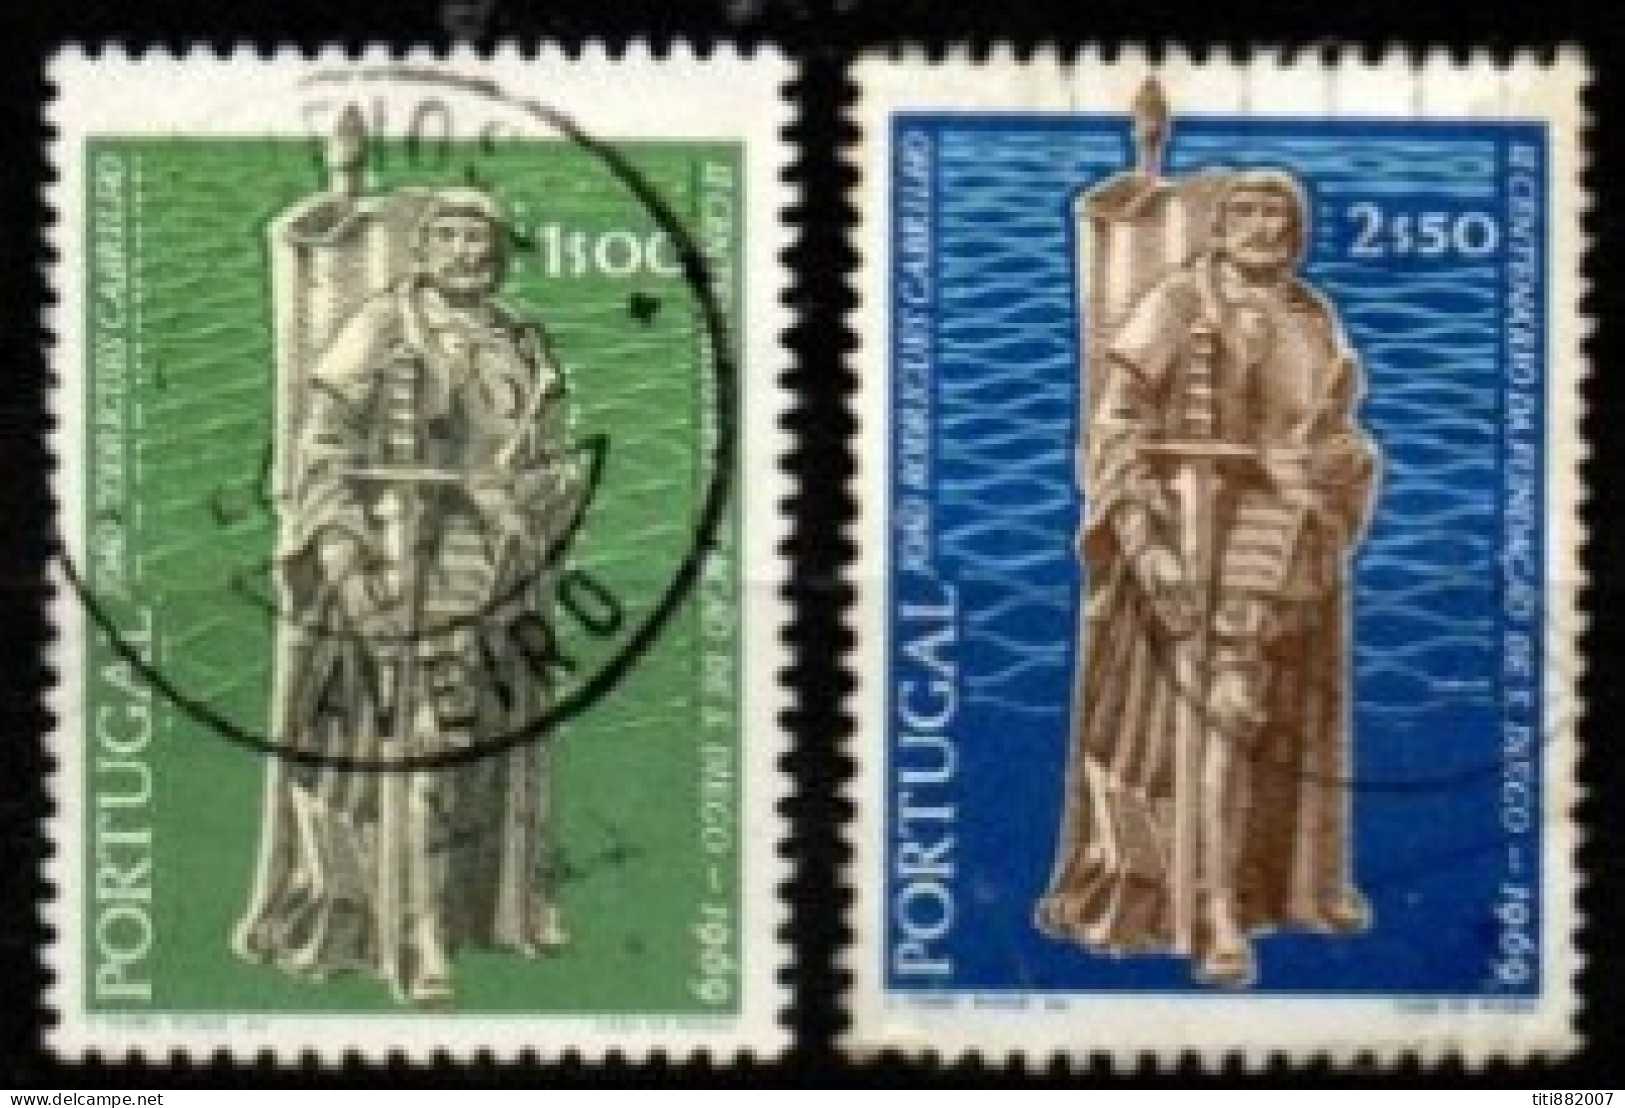 PORTUGAL     -    1969 .  Y&T N° 1060 / 1061 Oblitérés.   Cabrilho - Used Stamps